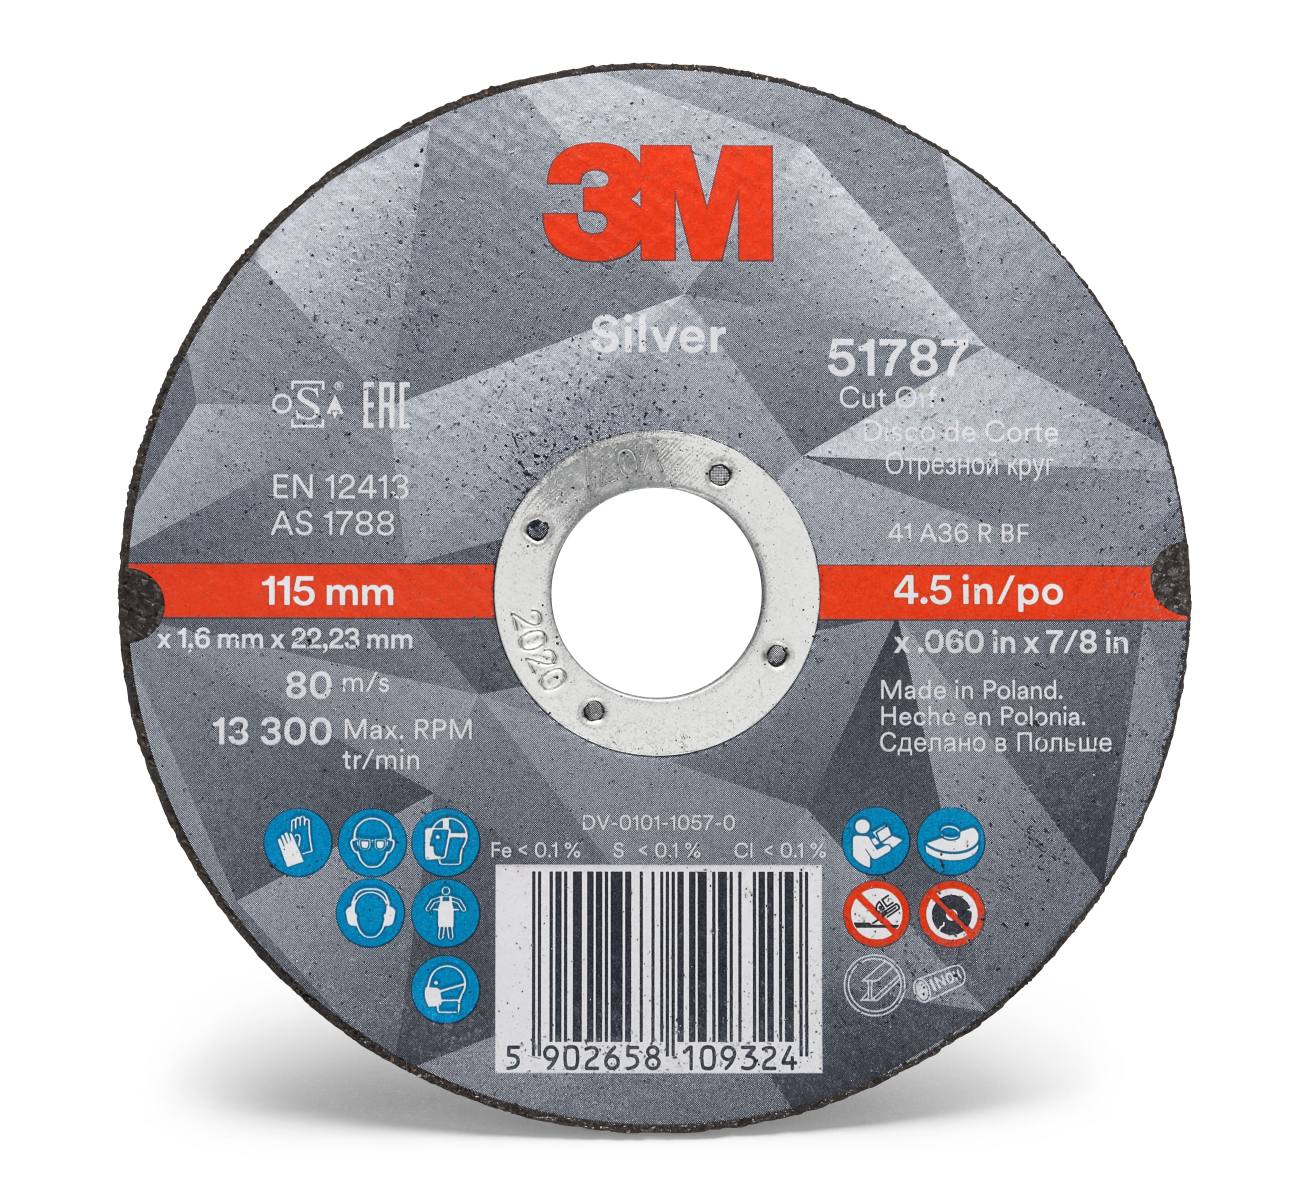 3M Silver Cut-Off Wheel Trennscheibe, 100 mm, 1,0 mm, 16 mm, T41, 51775